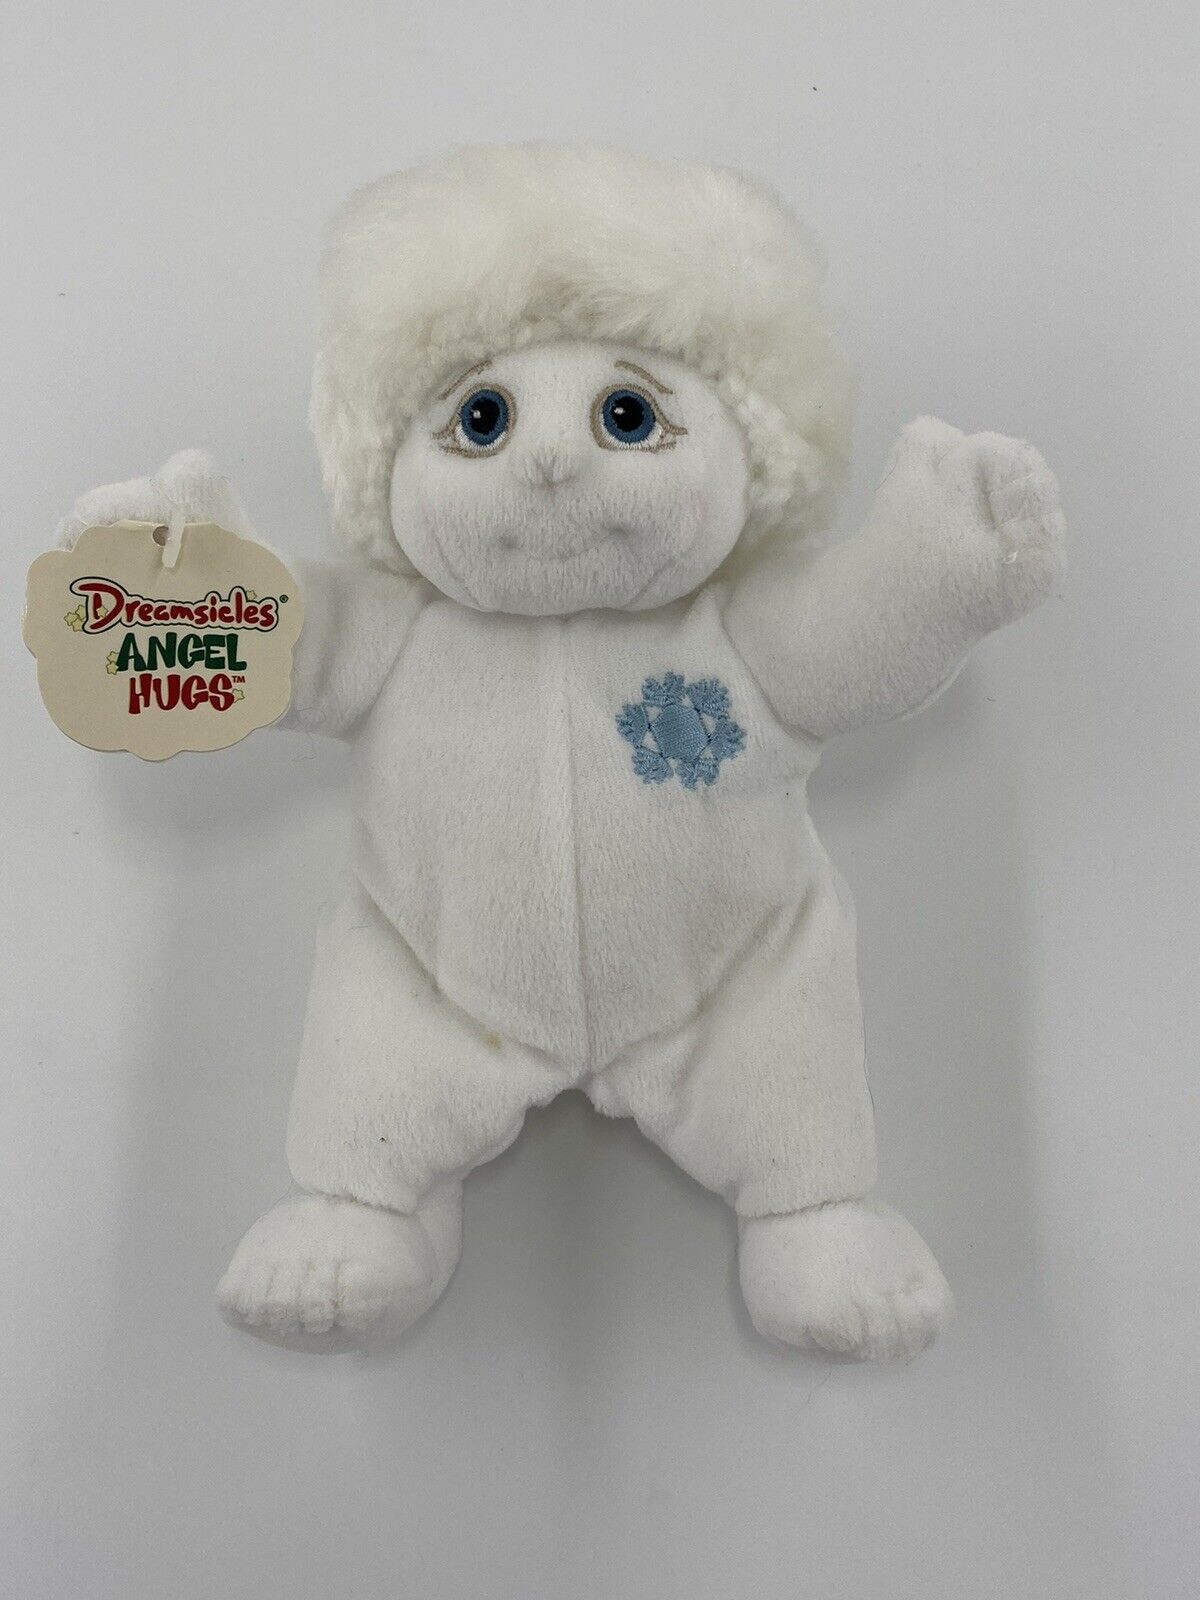 Dreamsicles “Crystal” Angel Hugs 7.5”  Plush Beanie Stuffed Animal Toy